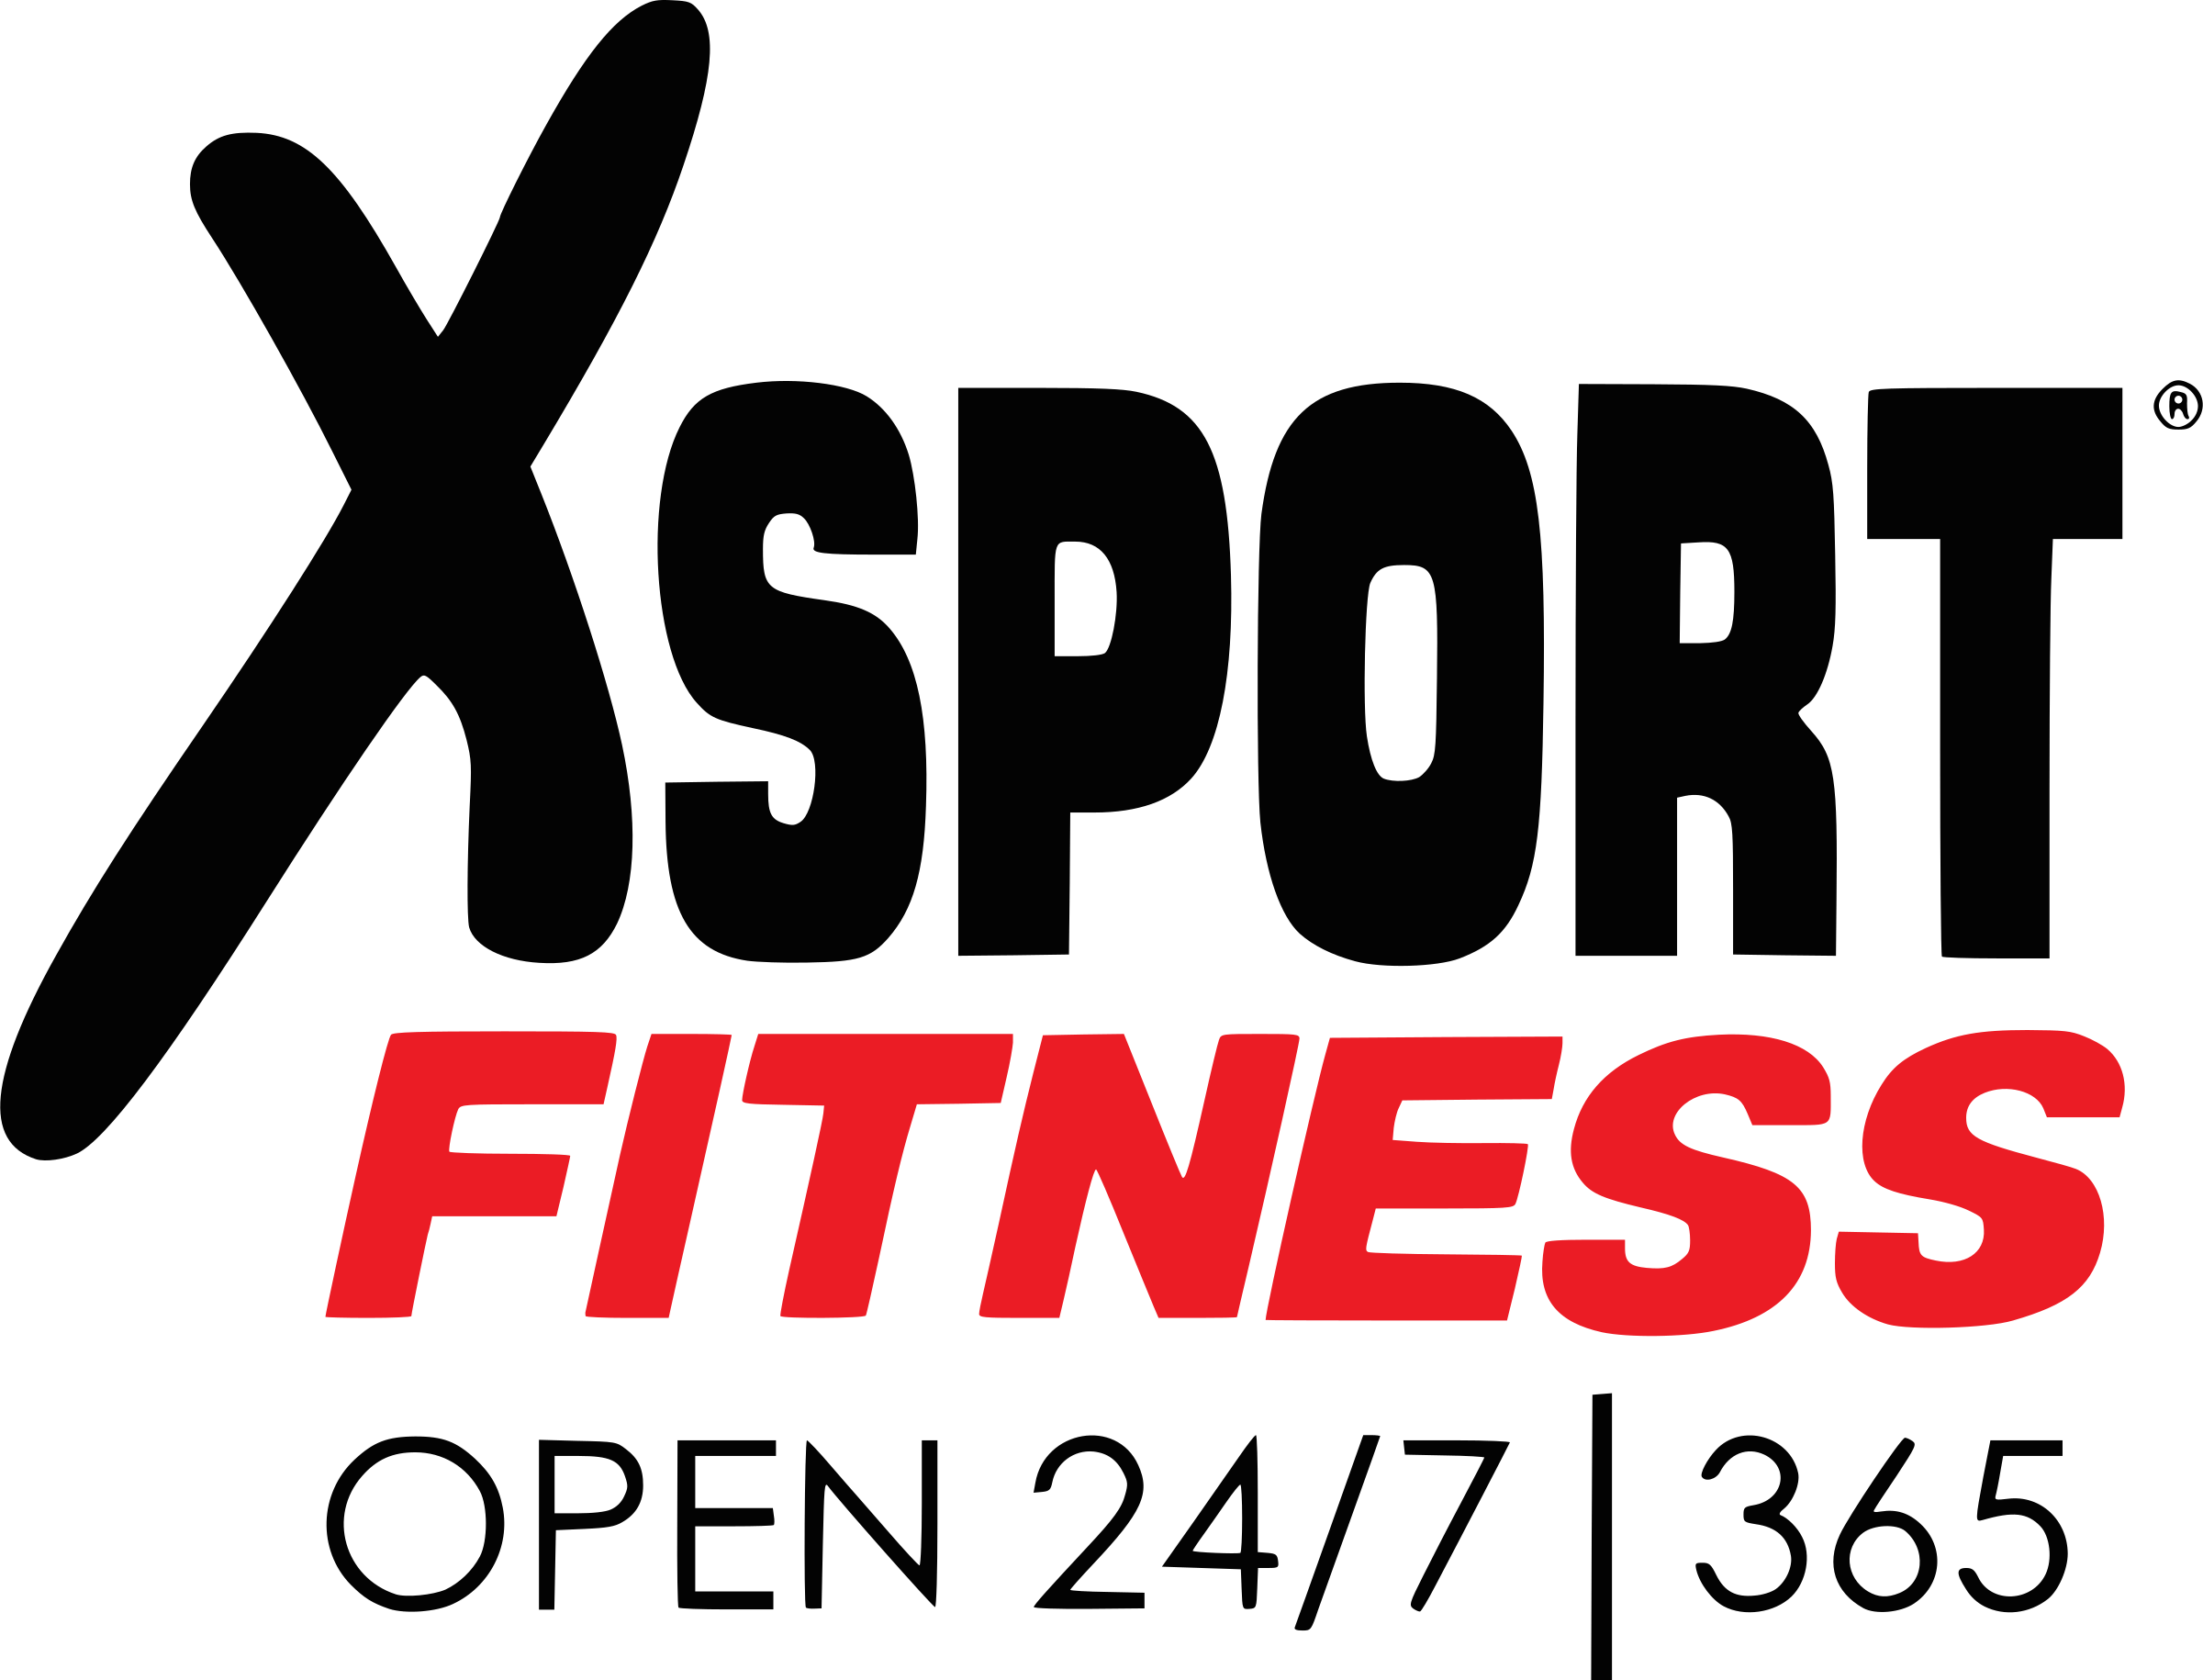 XSport Logo - Xsport Fitness Logo PNG Transparent & SVG Vector